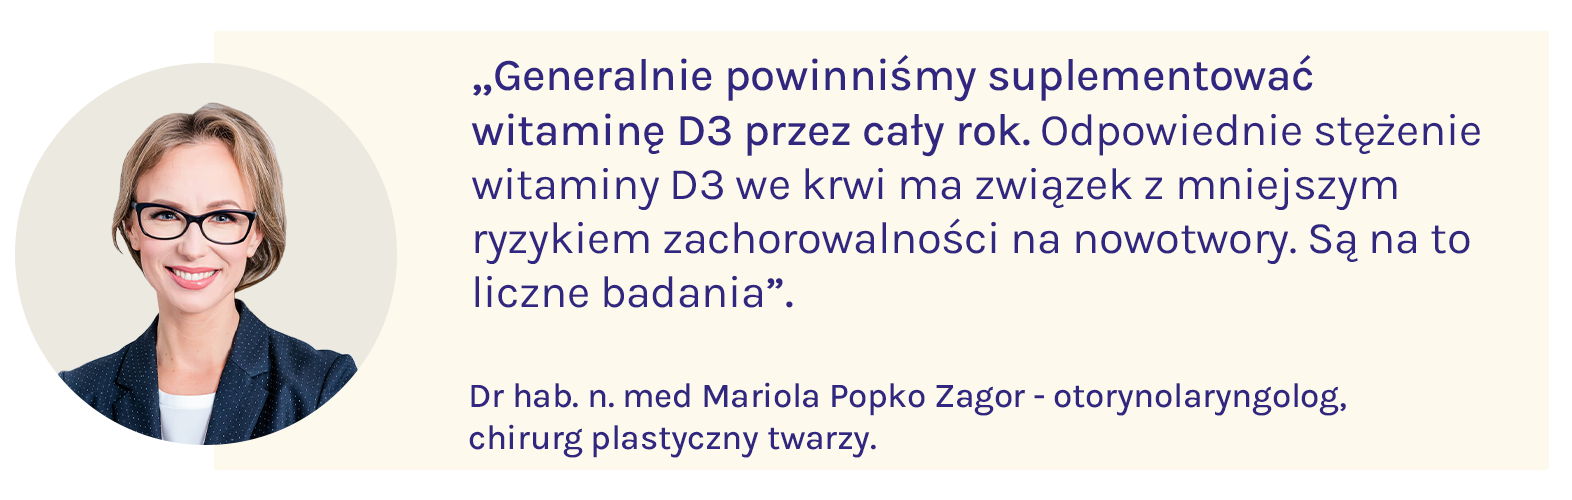 Ph.D. n. med. Mariola Popko Zagor says that vitamin D3 supplementation is necessary all year round